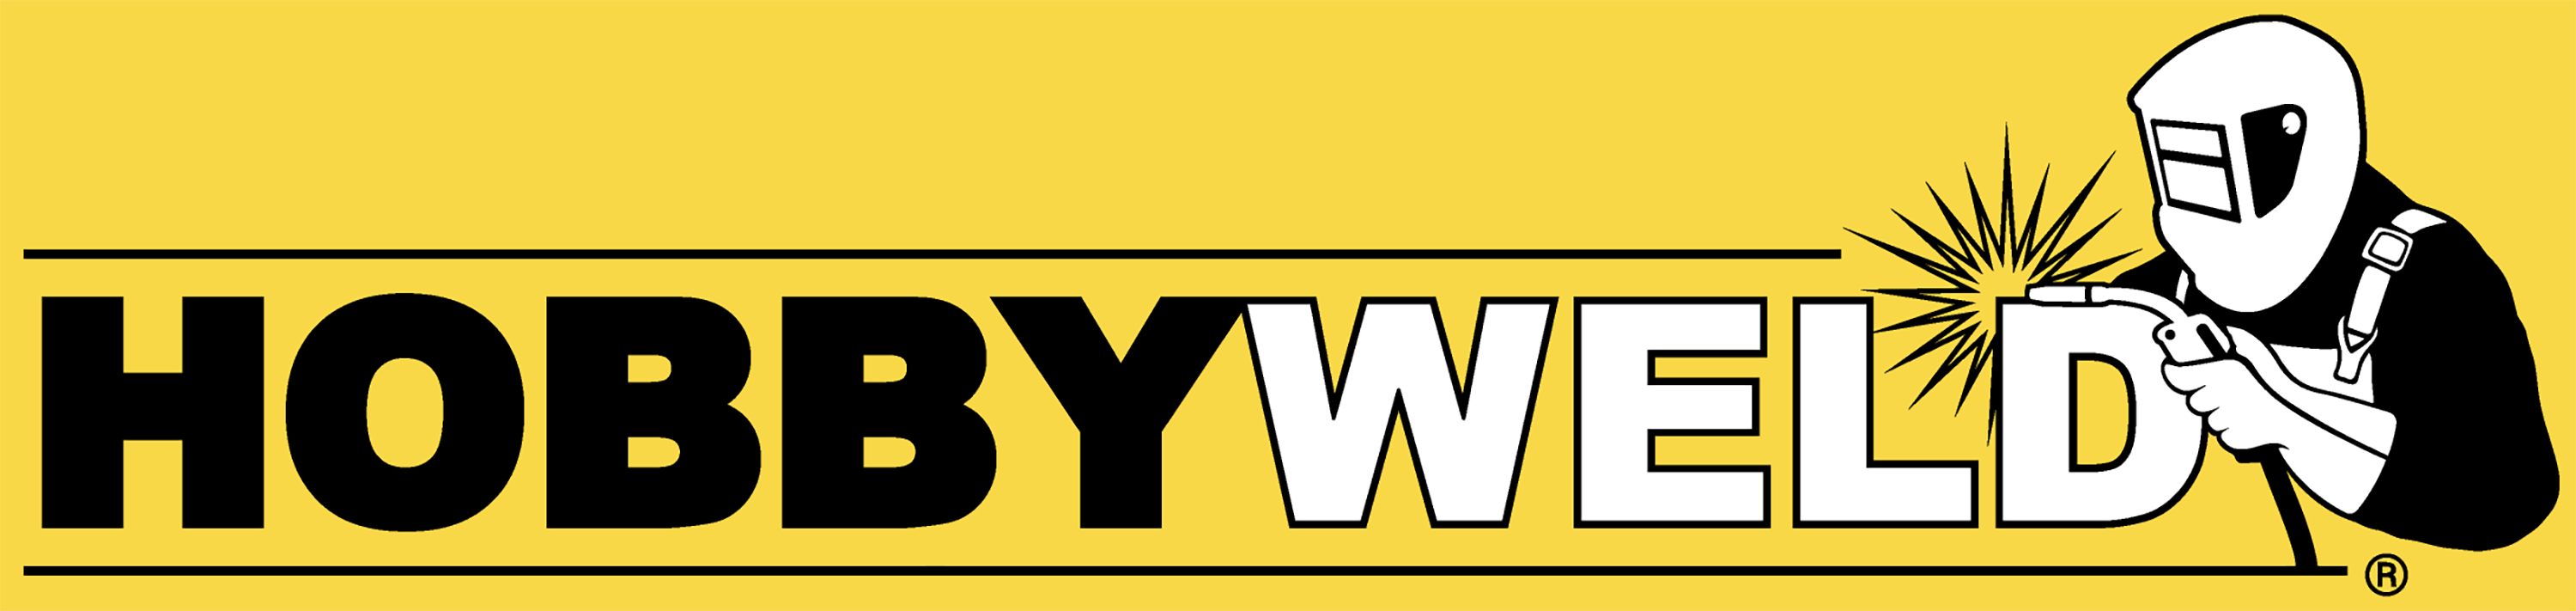 Hobbyweld logo, rent free gas cylinders